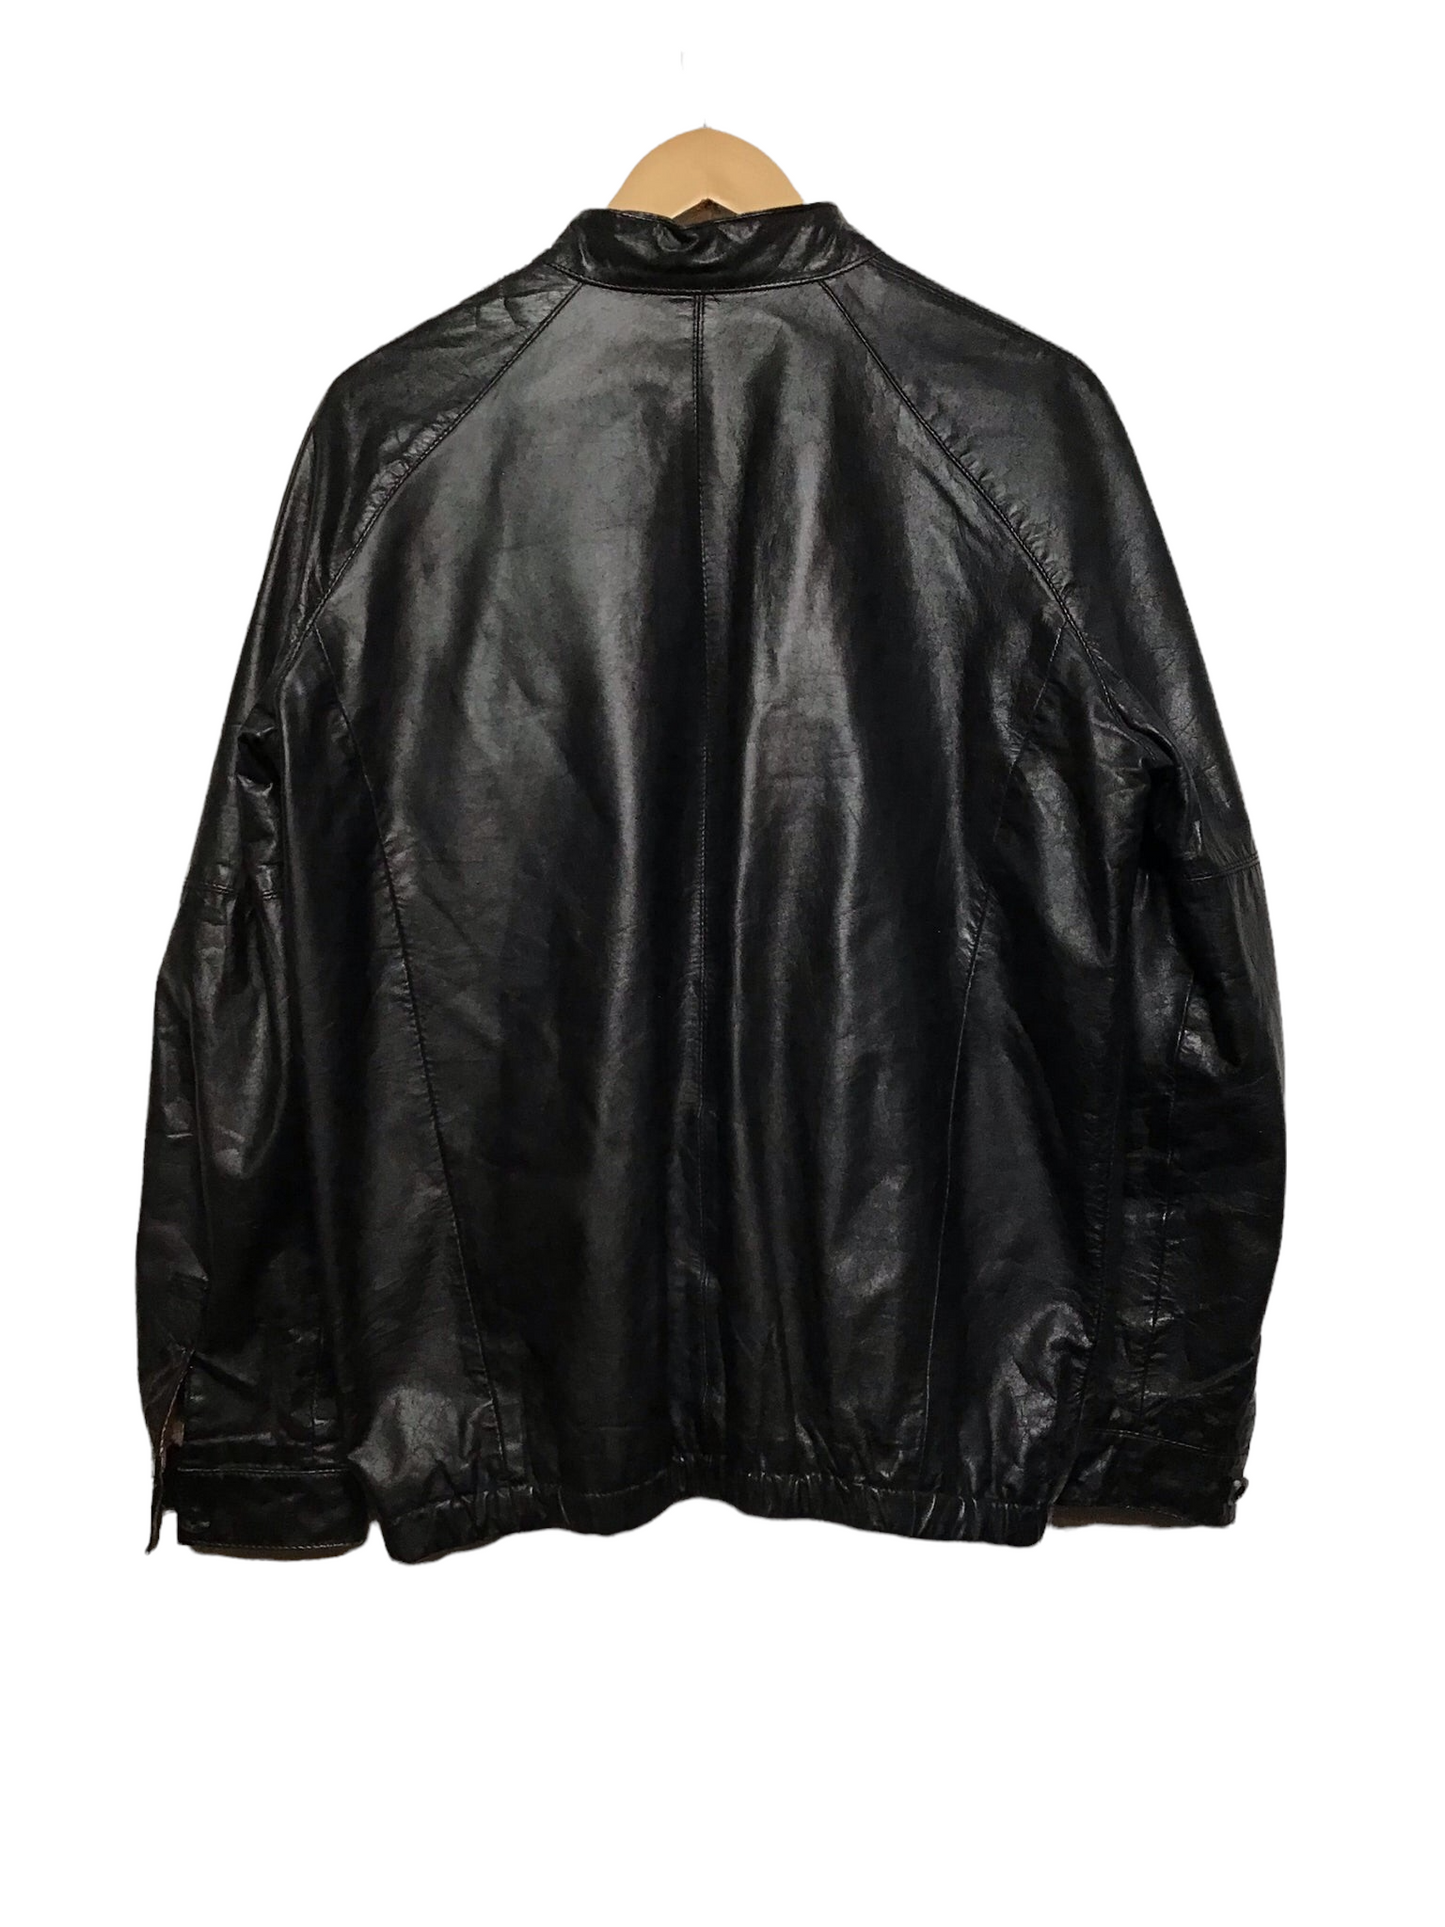 Black Leather Bomber Jacket (Size L)